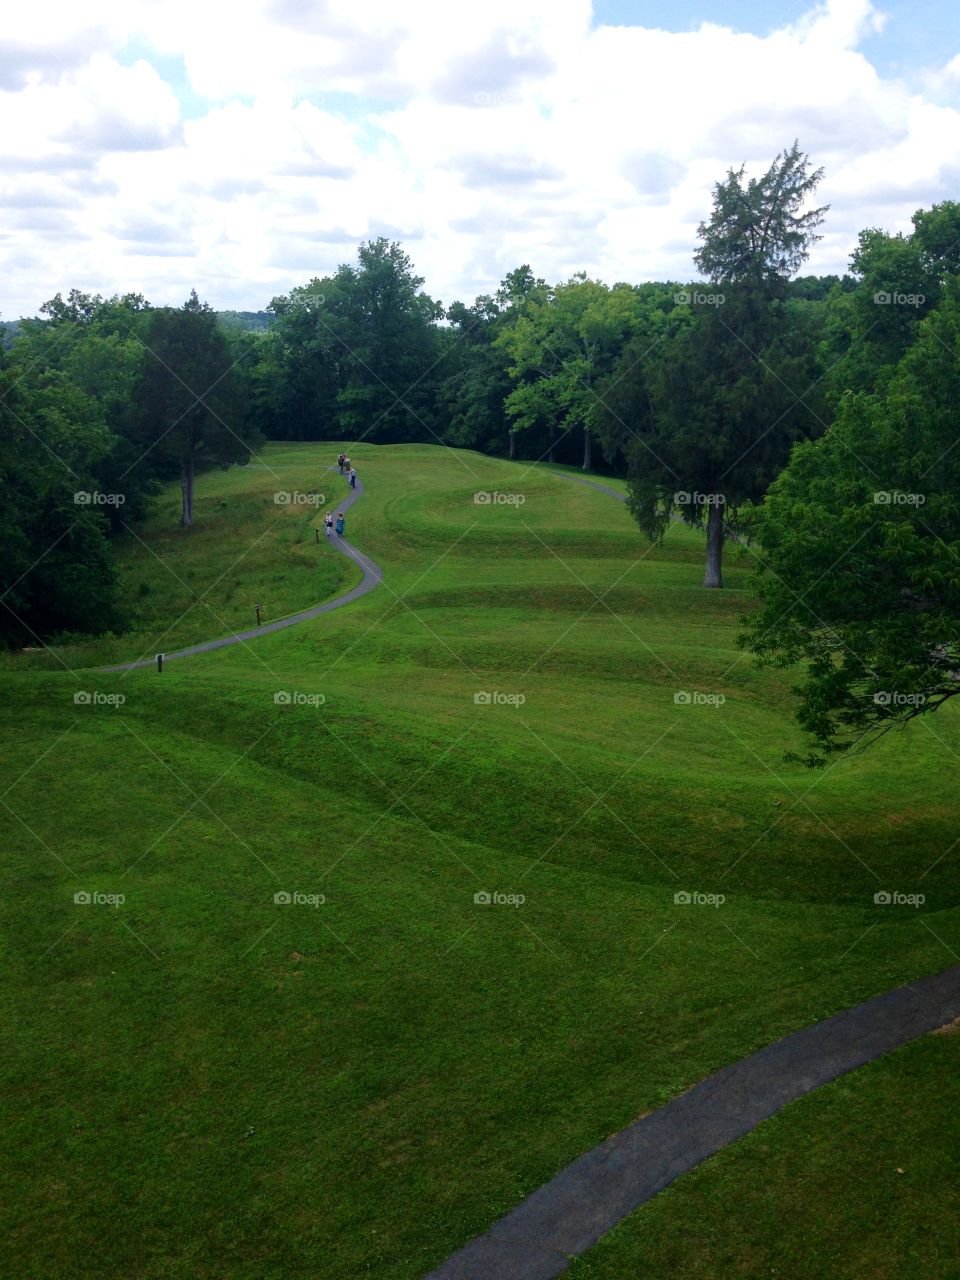 Serpent mound (Ohio) 